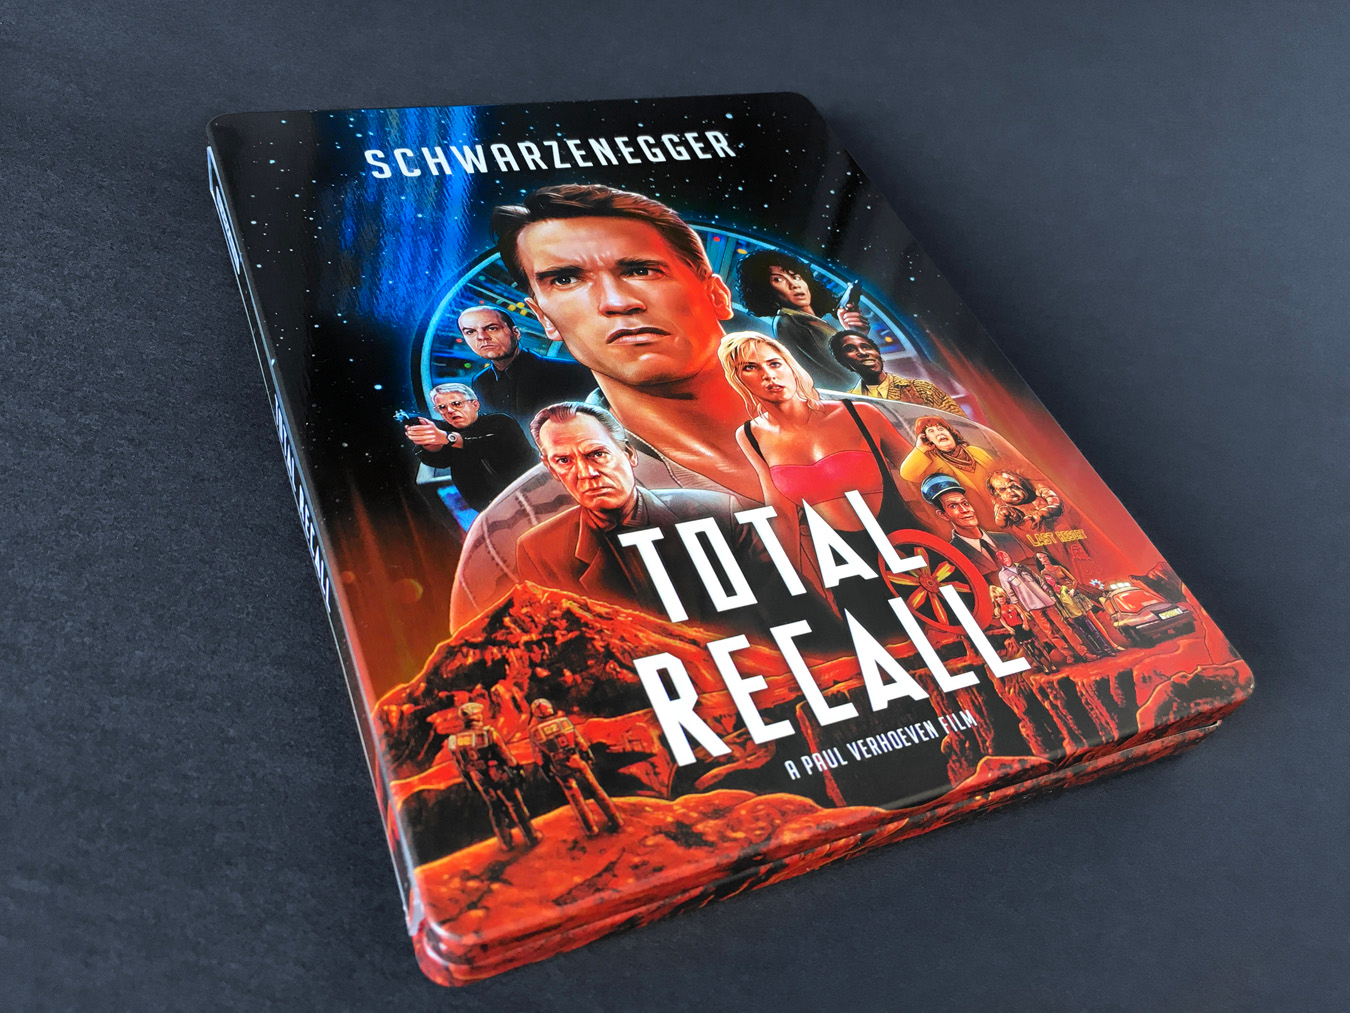 Total Recall Steelbook cover by Kyle Lambert